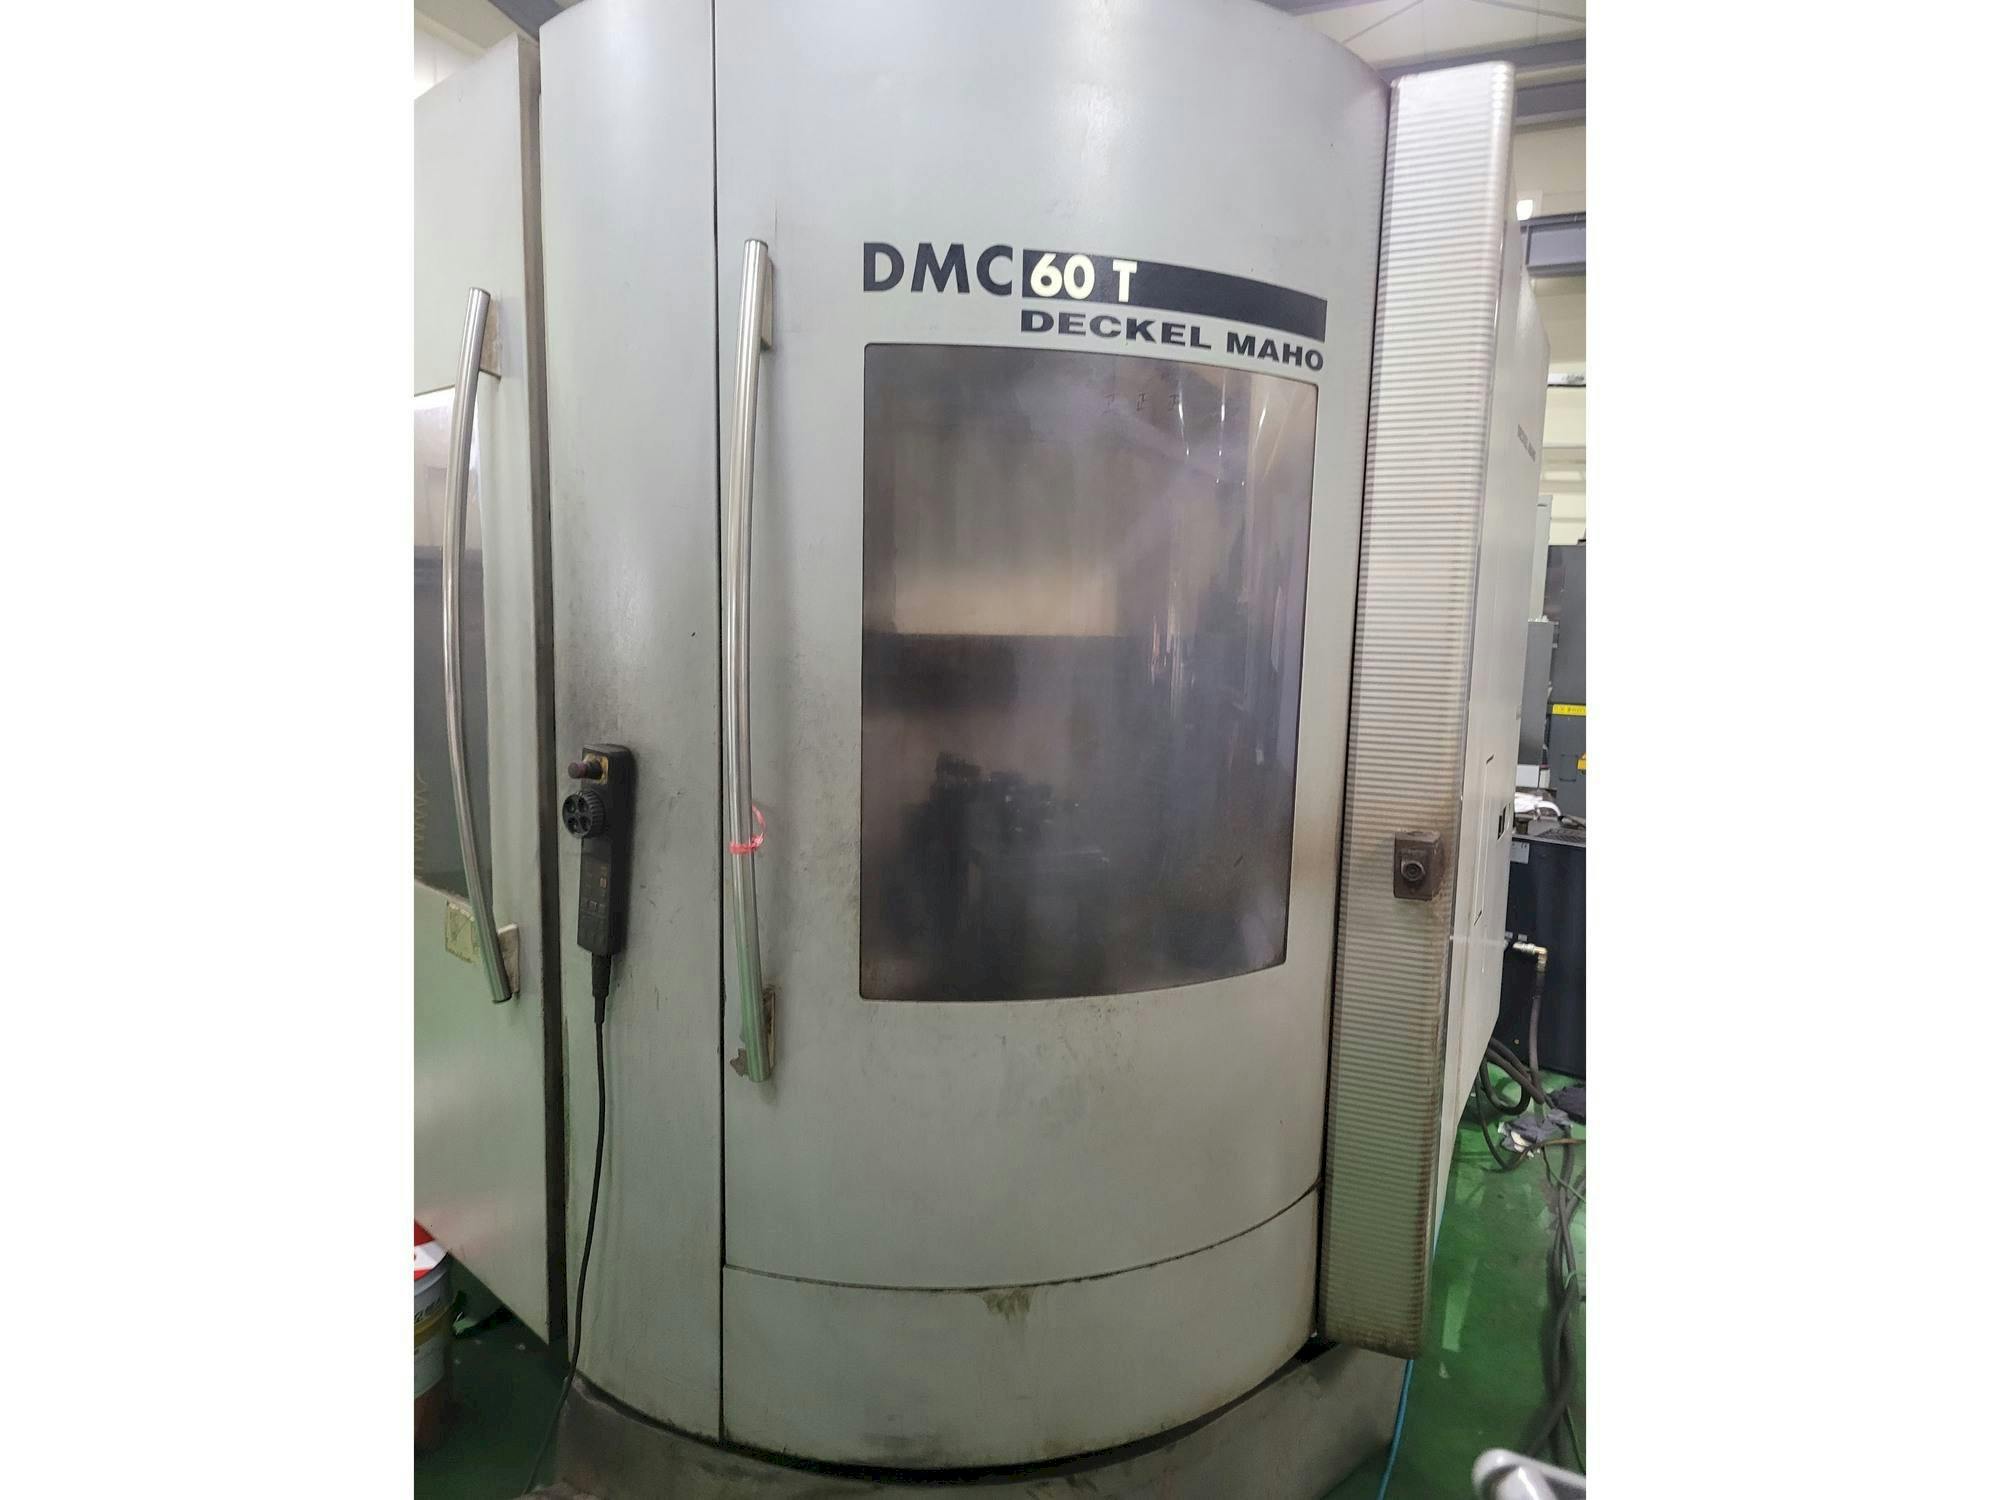 Prikaz  stroja DECKEL MAHO DMC 60 T  sprijeda